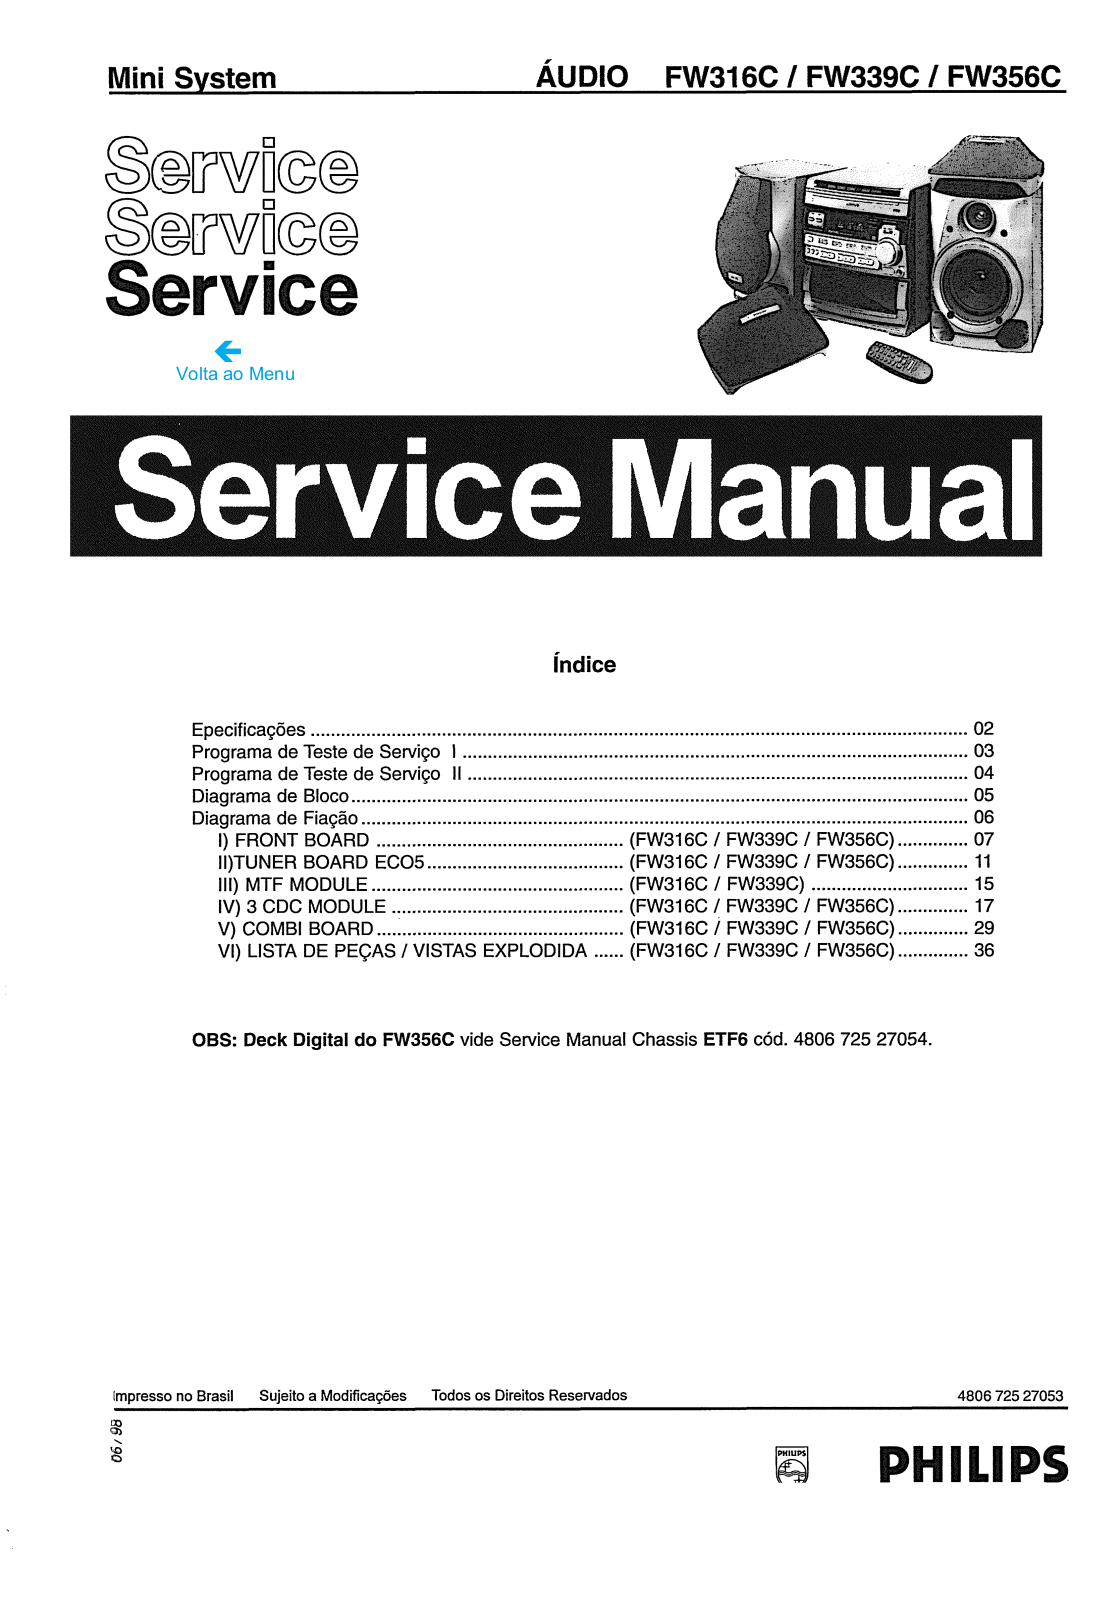 Philips FW-339, FW-356-C Service manual